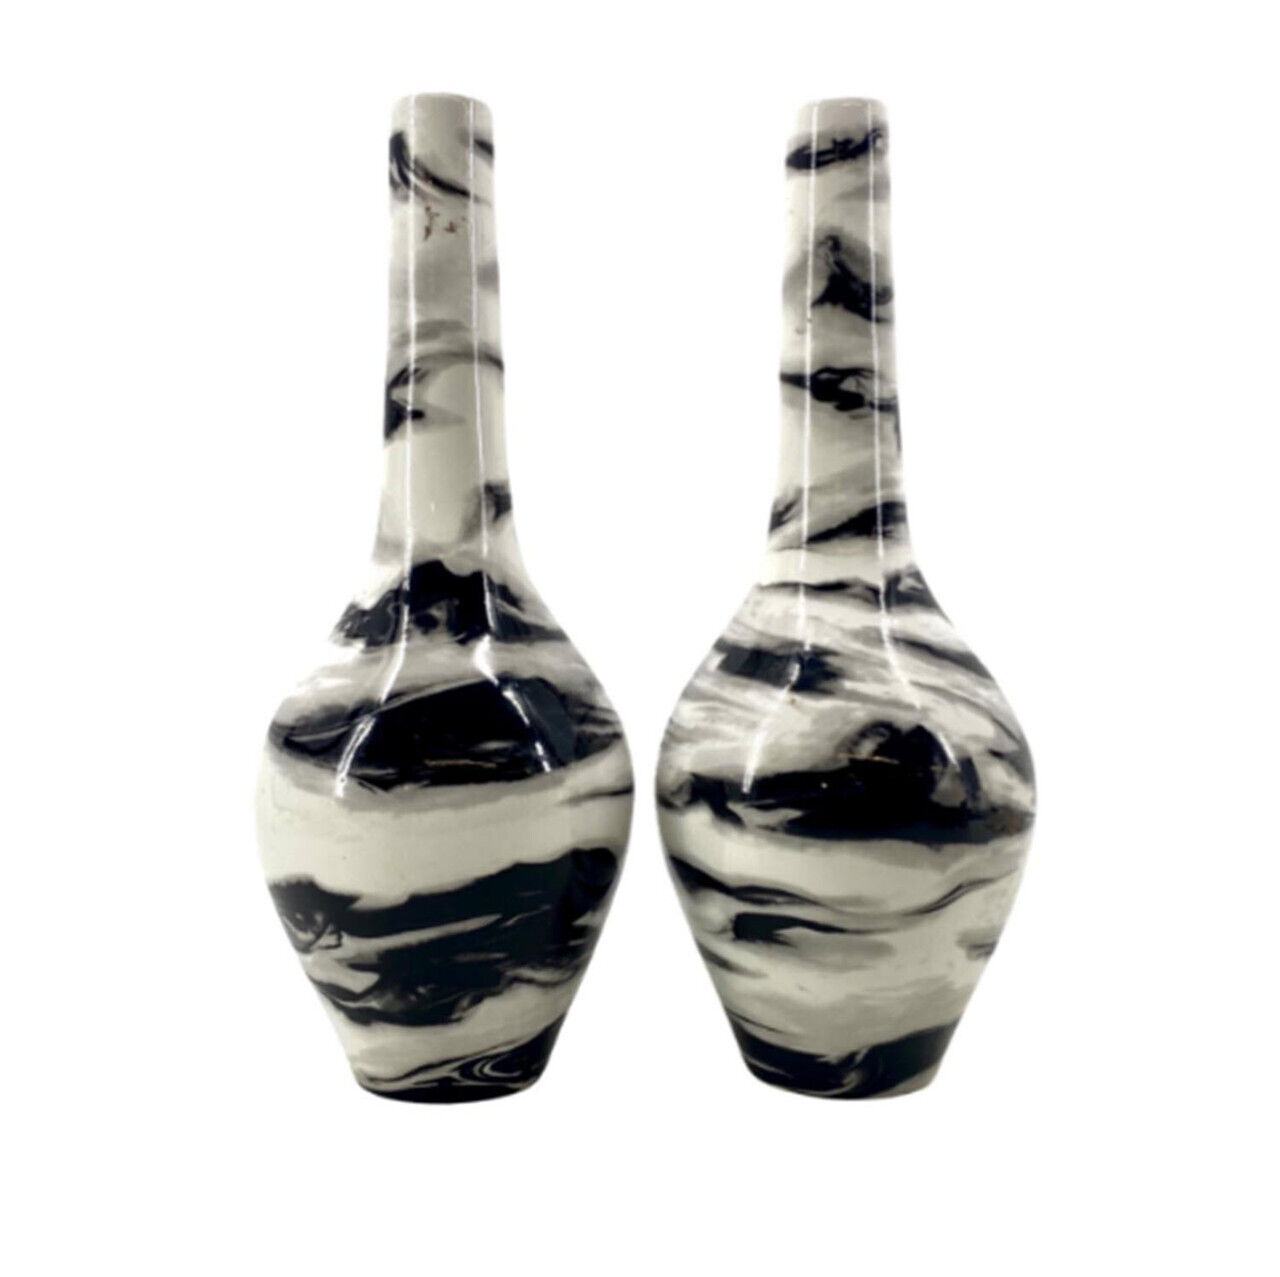 2x Black and White Contemporary Vases | Ceramic | Vintage